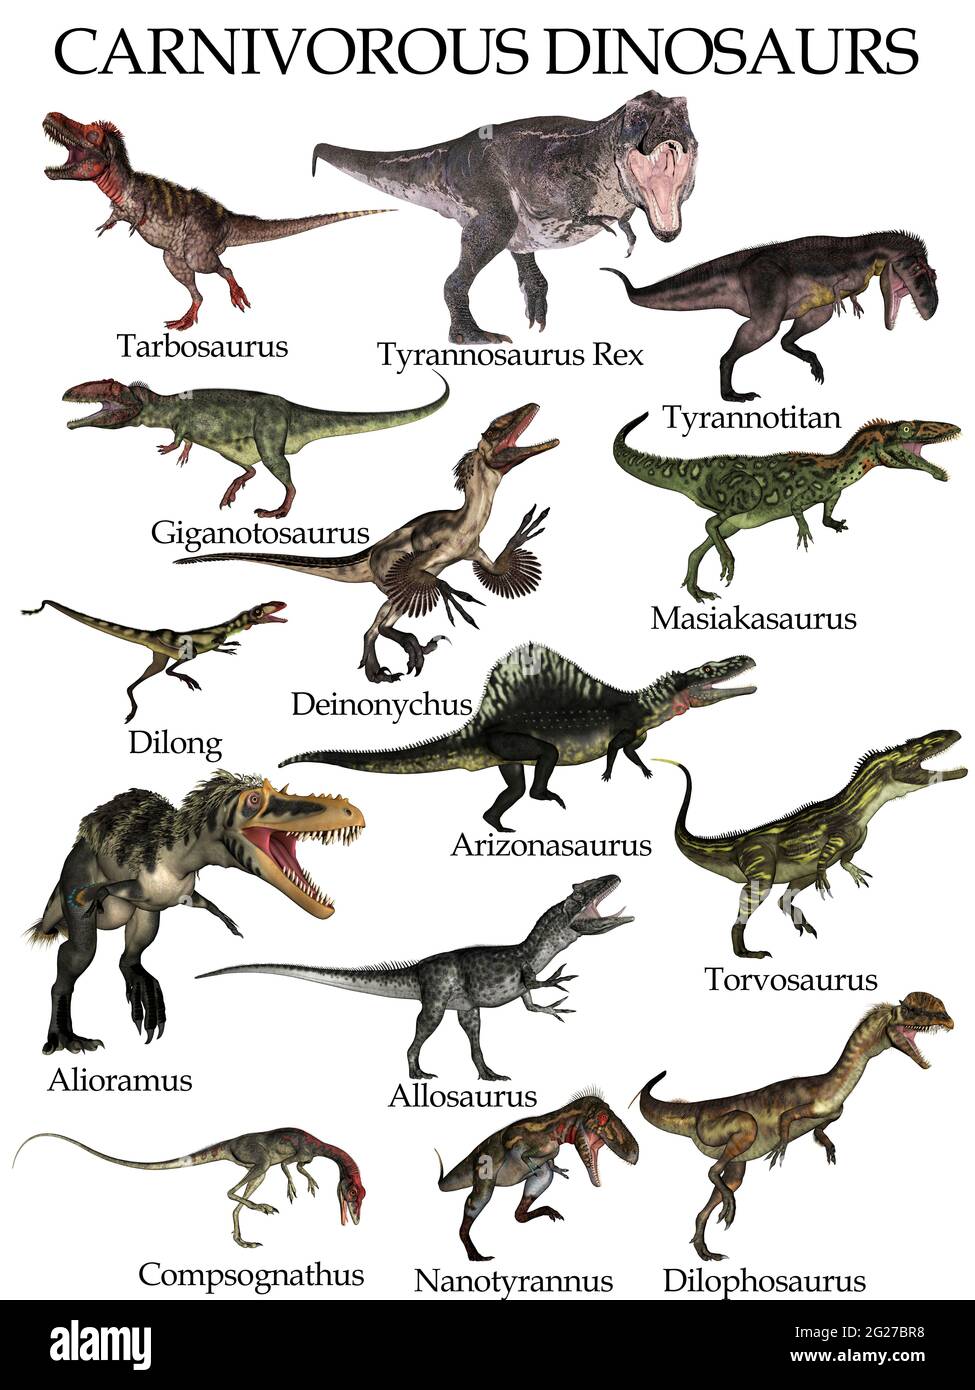 Dinosaurios carnívoros Imágenes recortadas de stock - Alamy